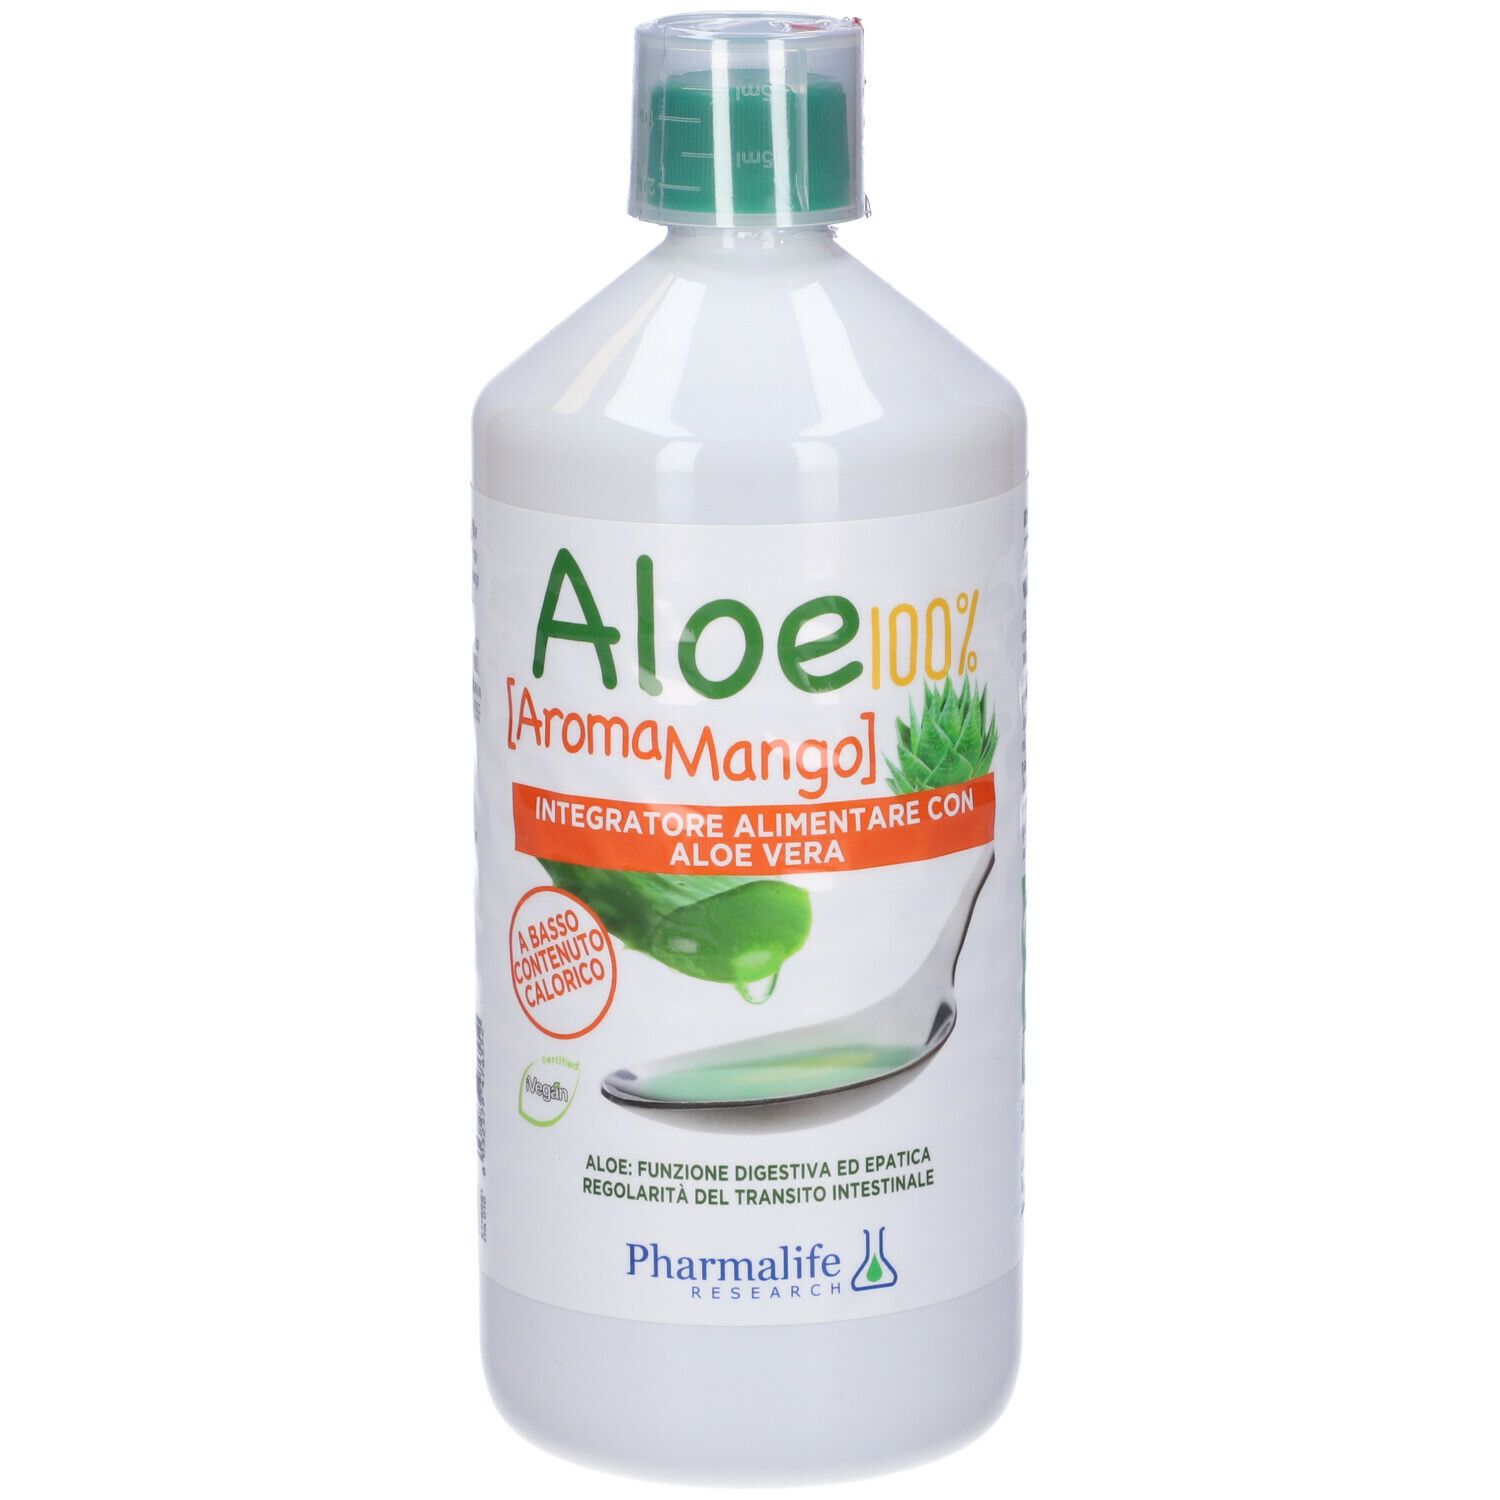 Image of Pharmalife Aloe 100% Aroma Mango Integratore Alimentare